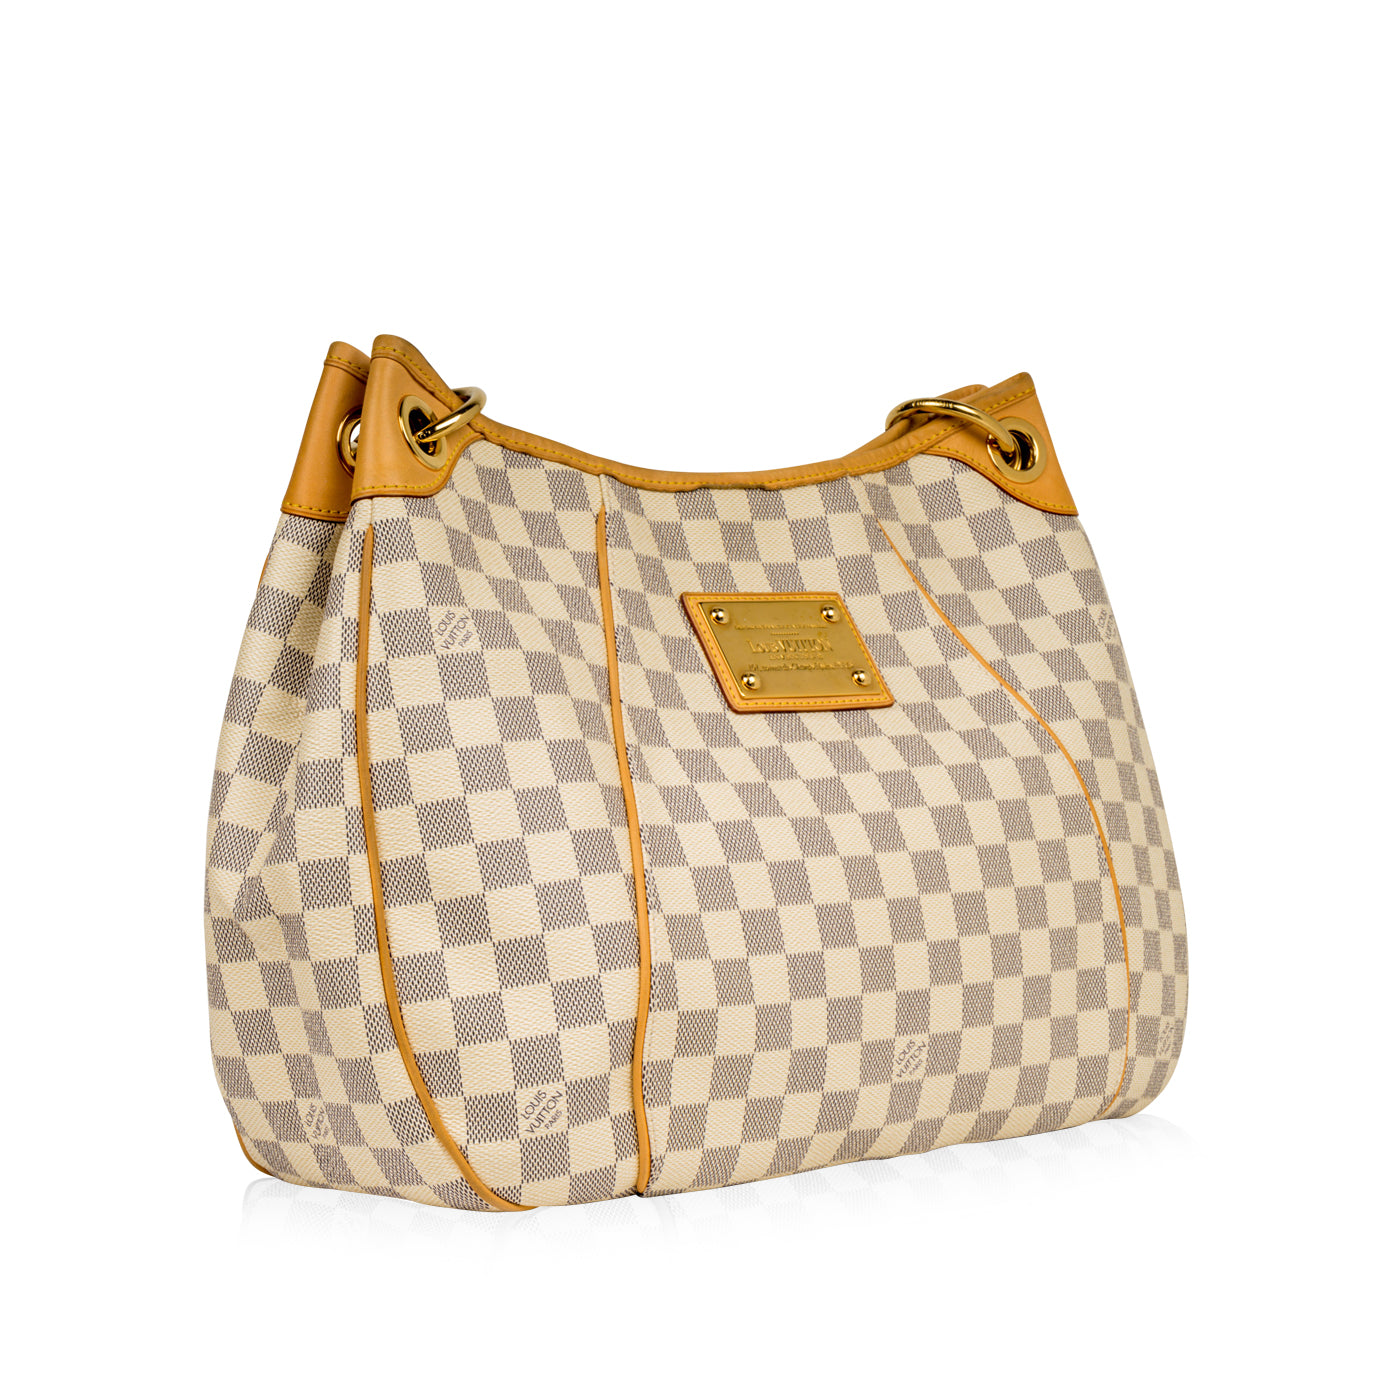 Louis Vuitton, Louis Vuitton Damier Azur Galliera PM shoulder bag in the  Damier checker